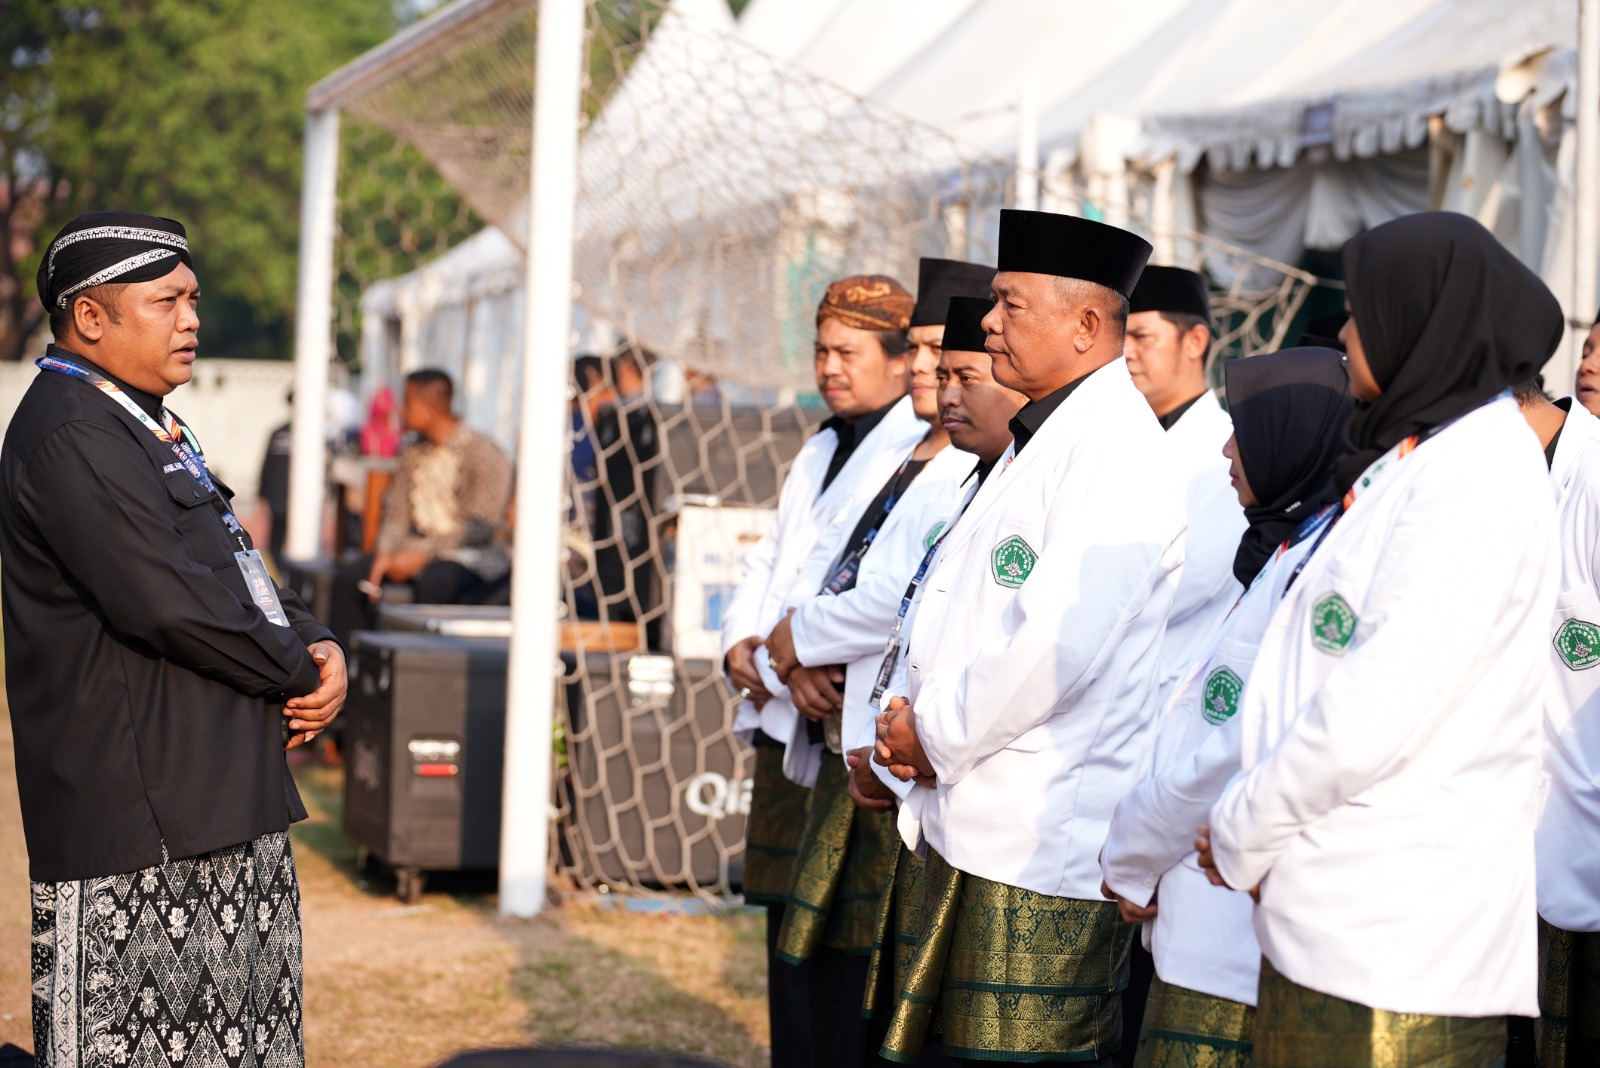 Foto Ijazah Kubro dan Pengukuhan Pimpinan Pusat Pagar Nusa